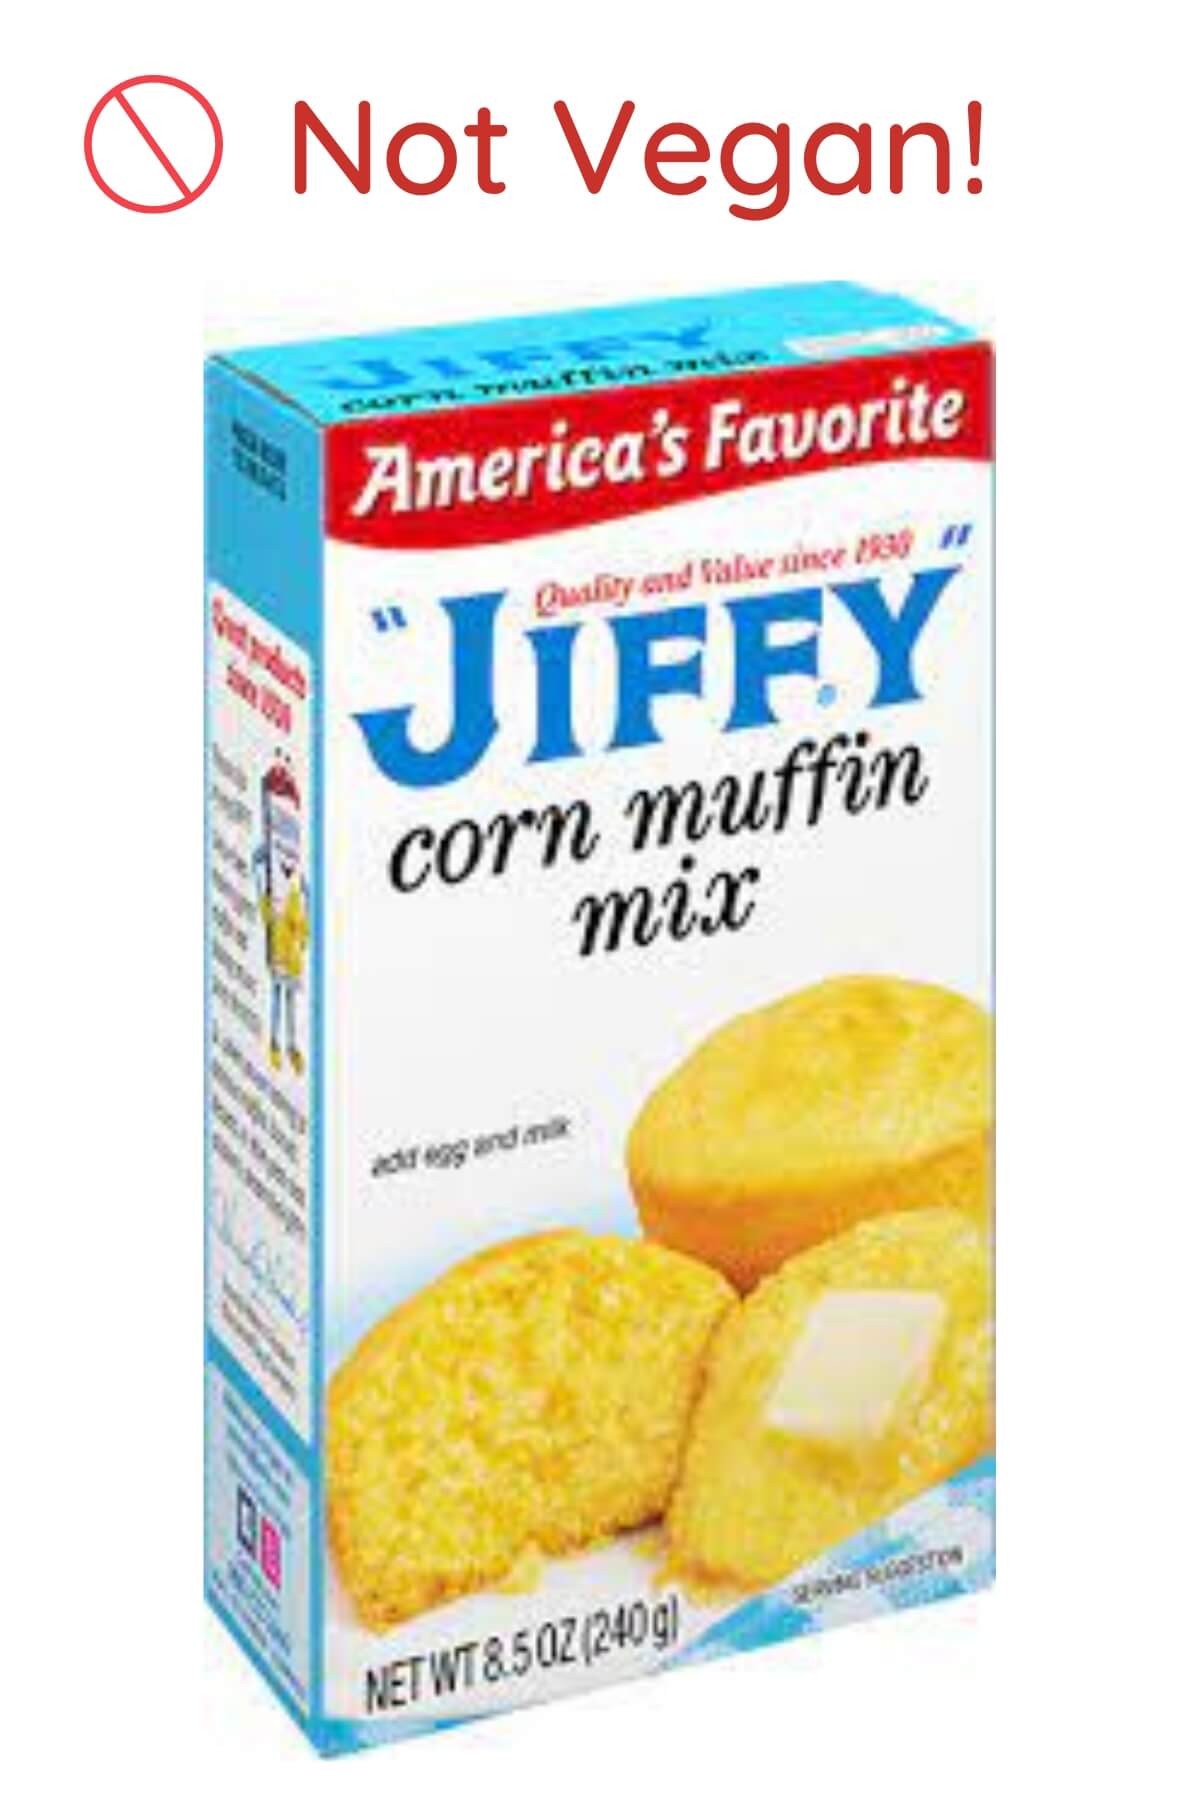 A box of jiffy original cornbread mix that is not vegan.